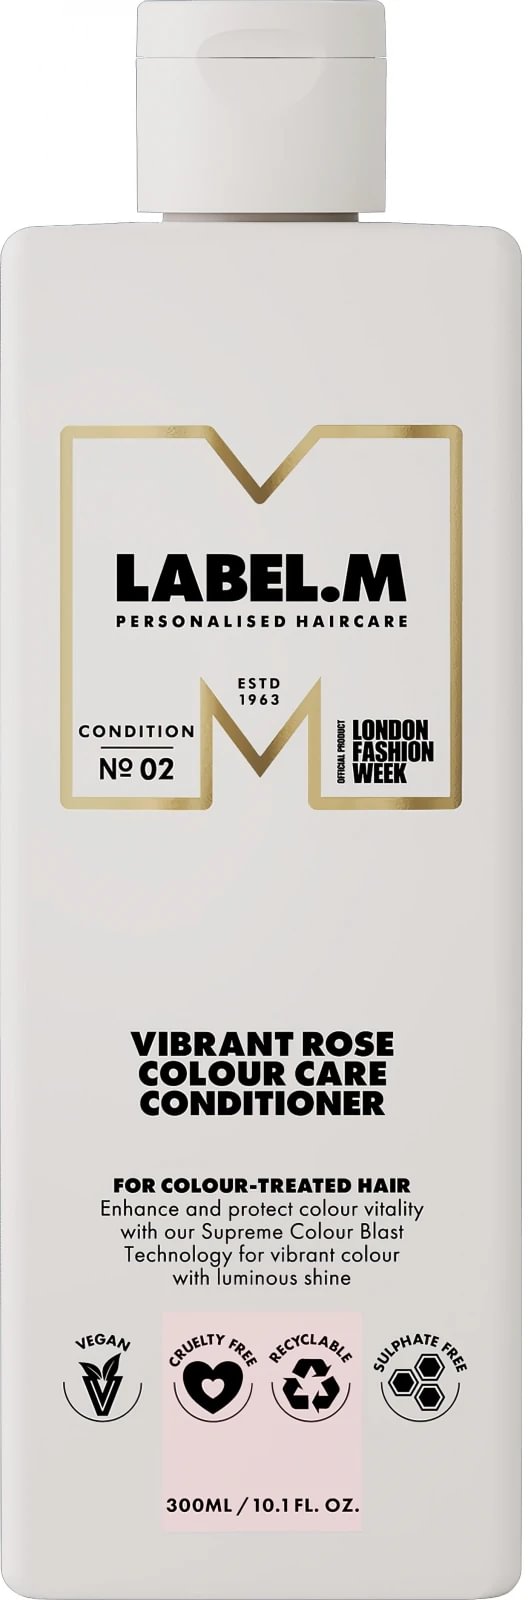 Label.m Professional Vibrant Rose Color Care Conditioner 1000 ml